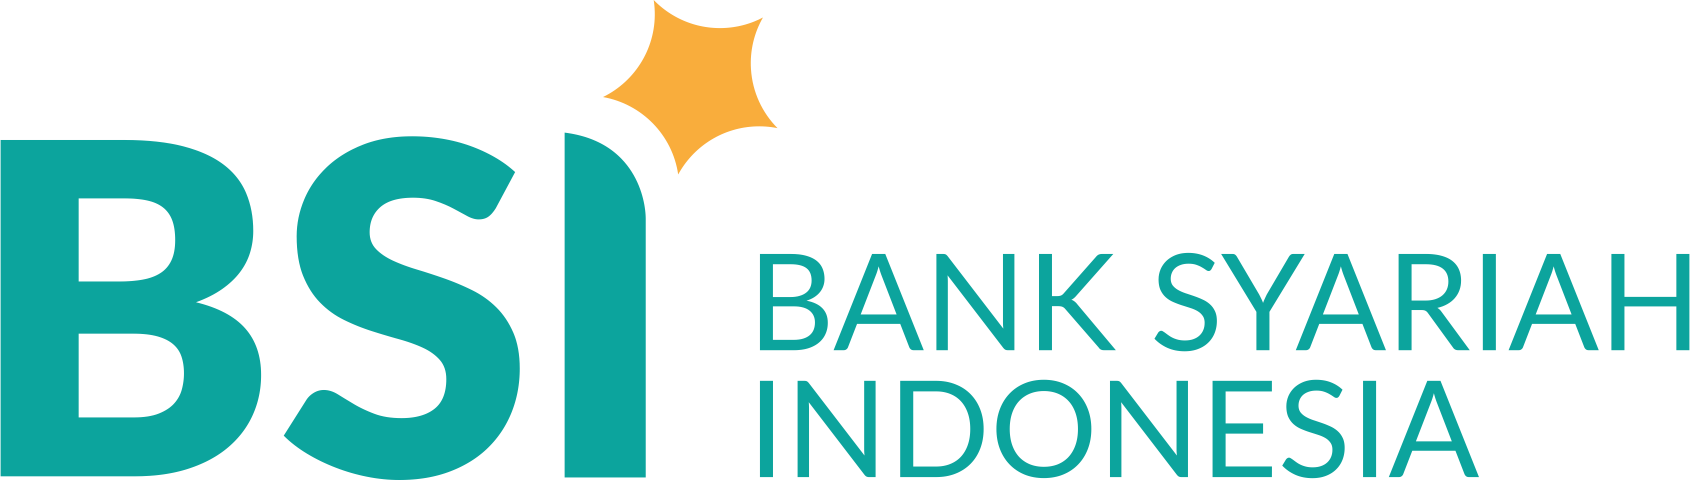 BSI-Bank-Syariah-Indonesia-Logo-PNG480p-Vector69Com.png